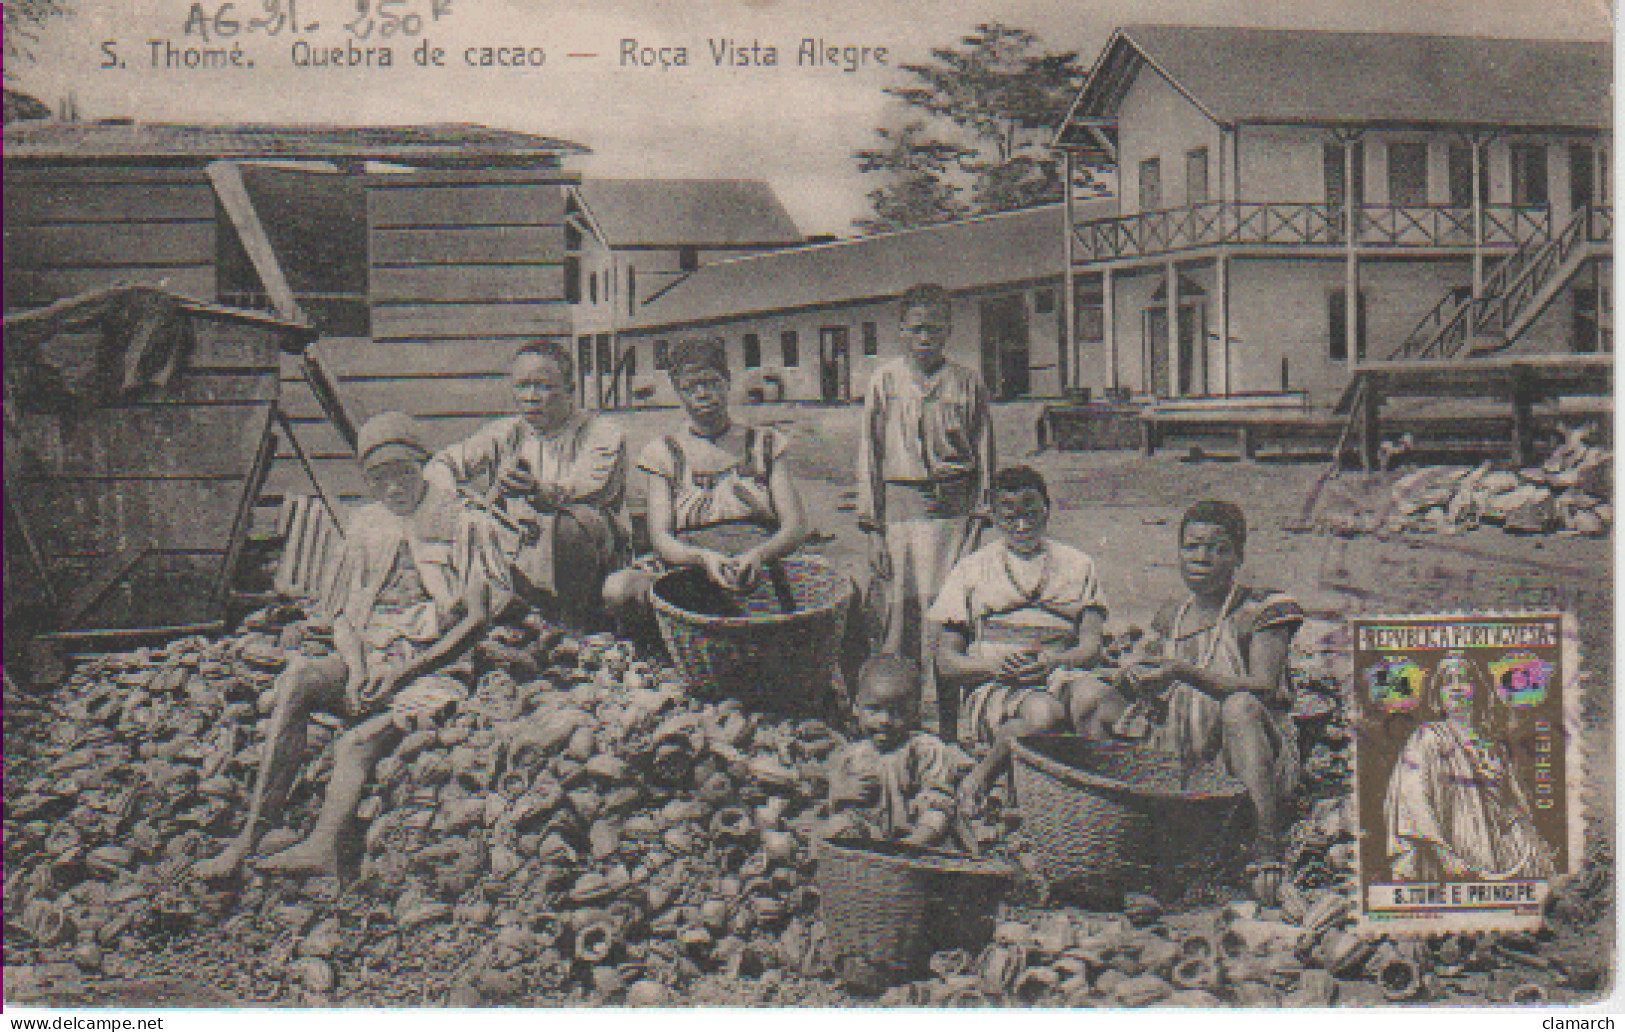 SAO TOME-Quebra De Cacao-Roça Vista Allegre - Santo Tomé Y Príncipe